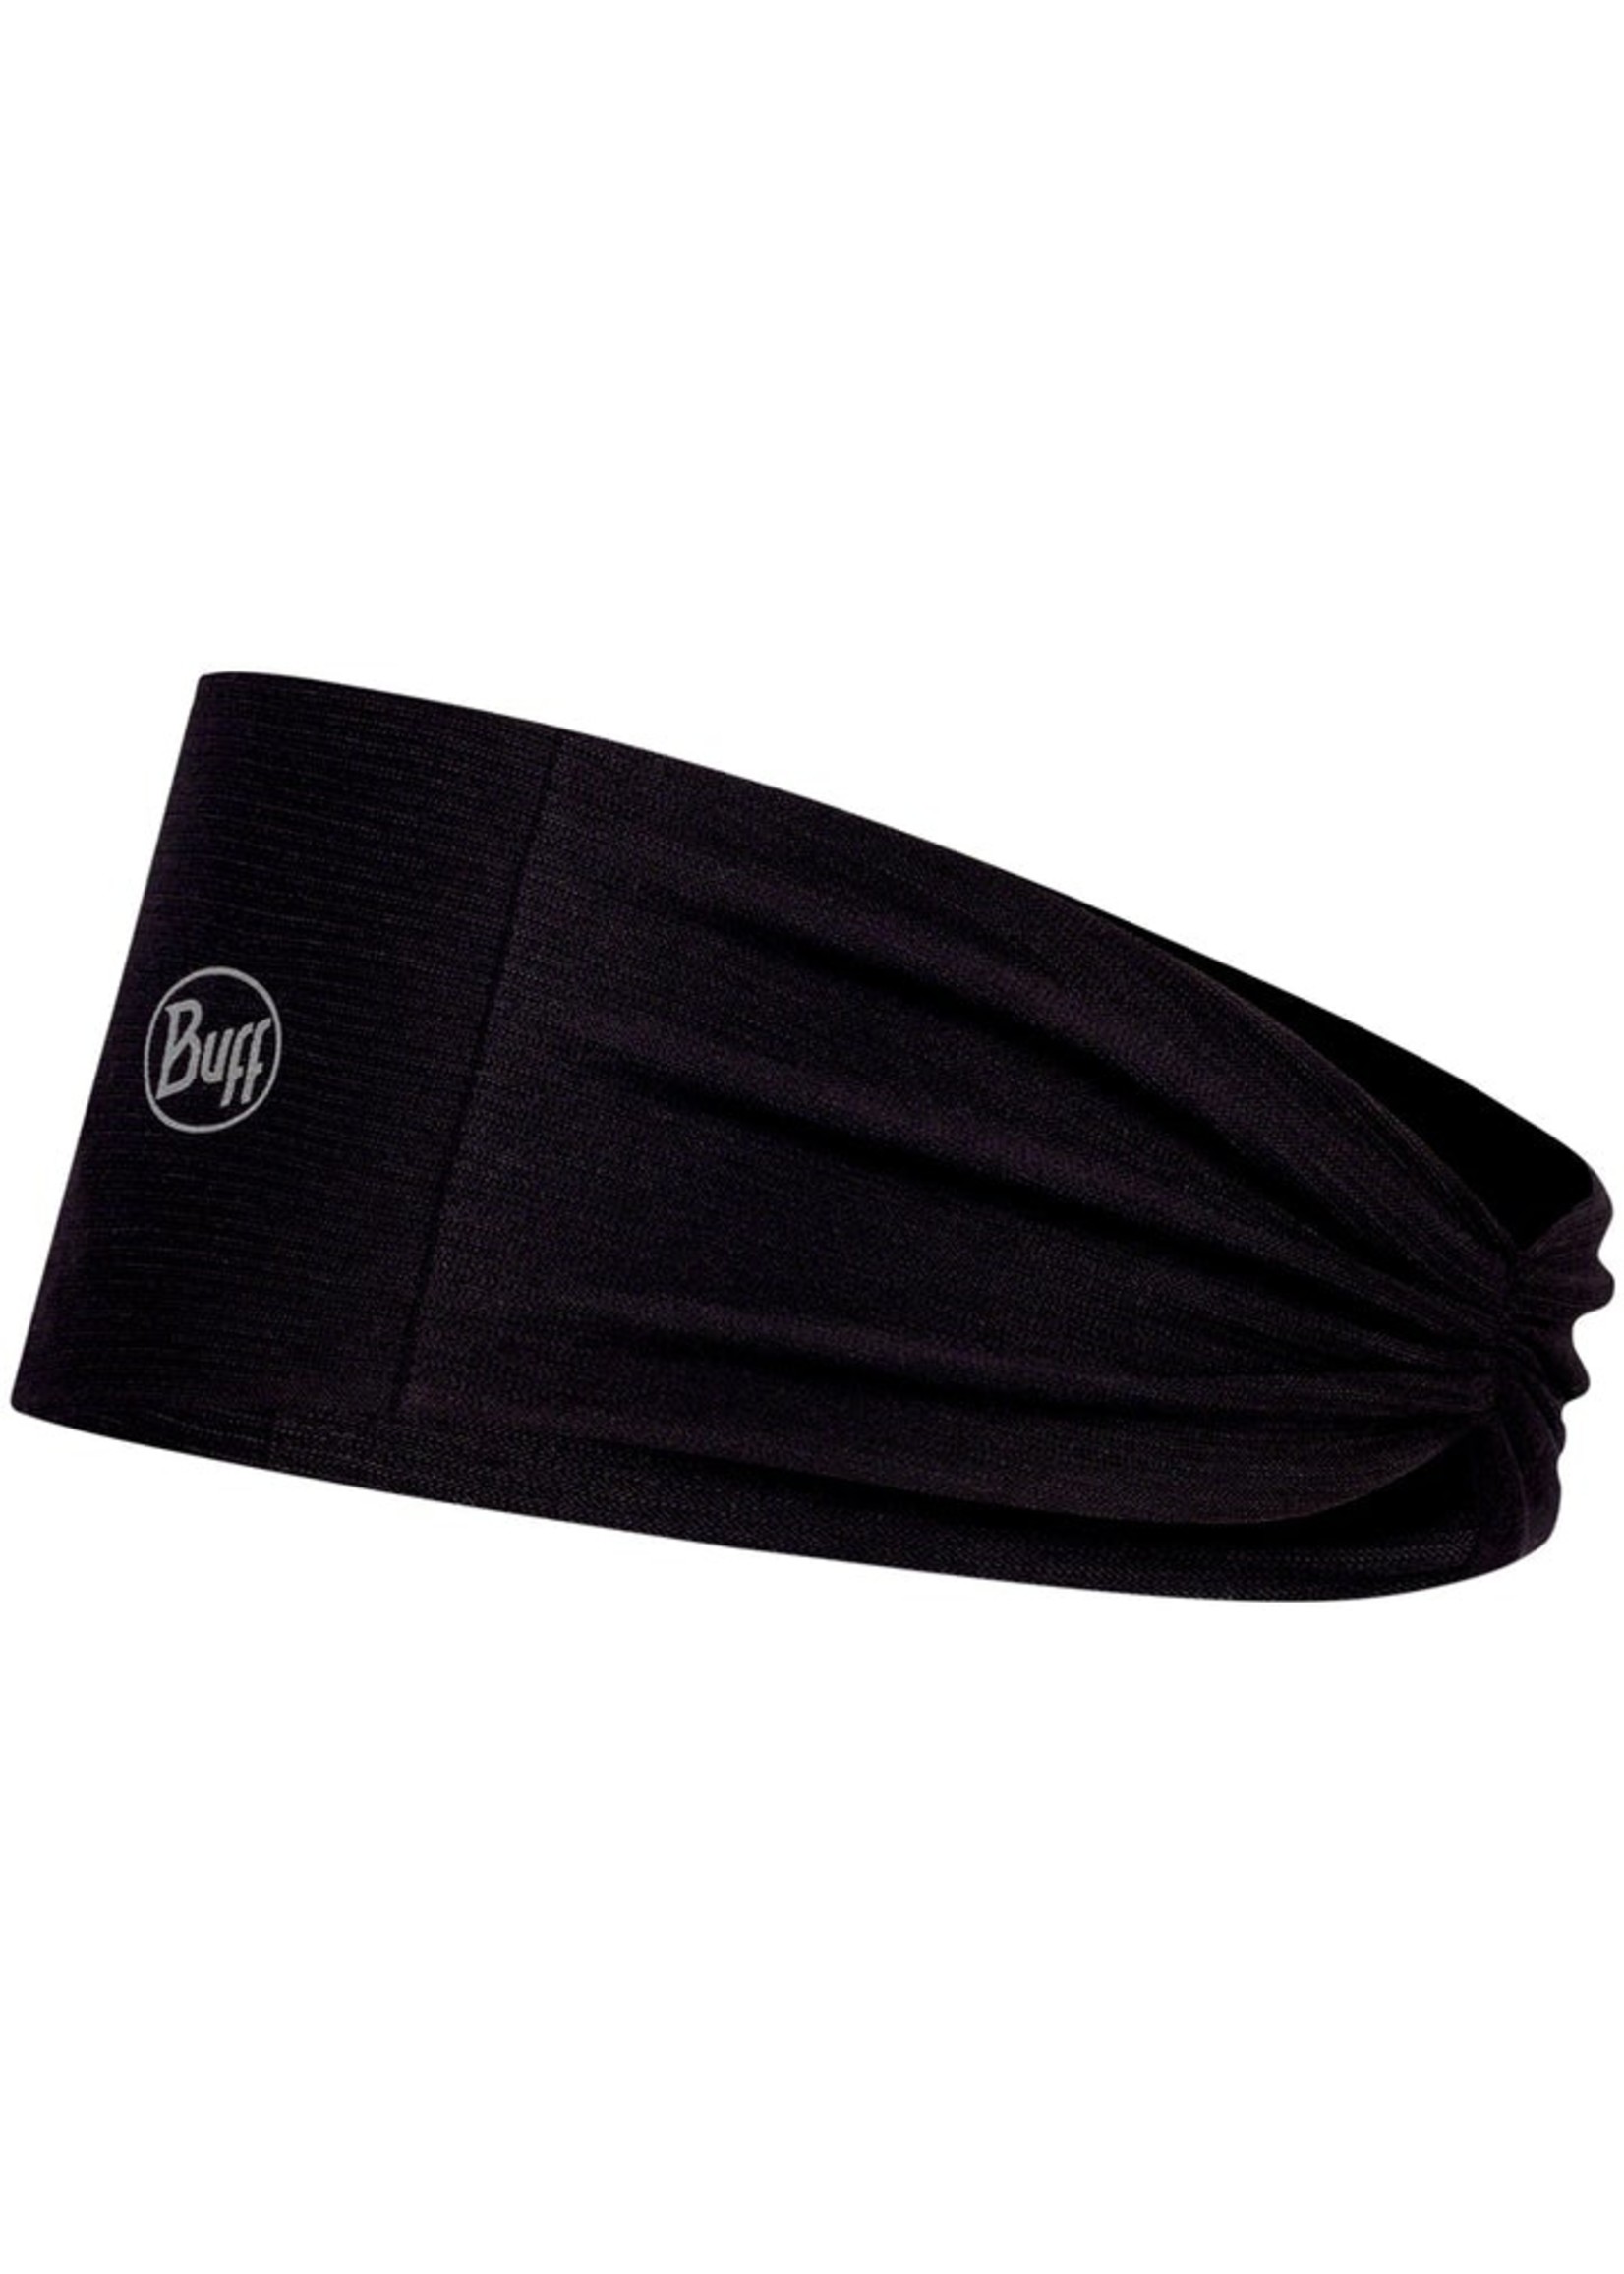 Buff Coolnet UV+ Tapered Headband - Black, One Size